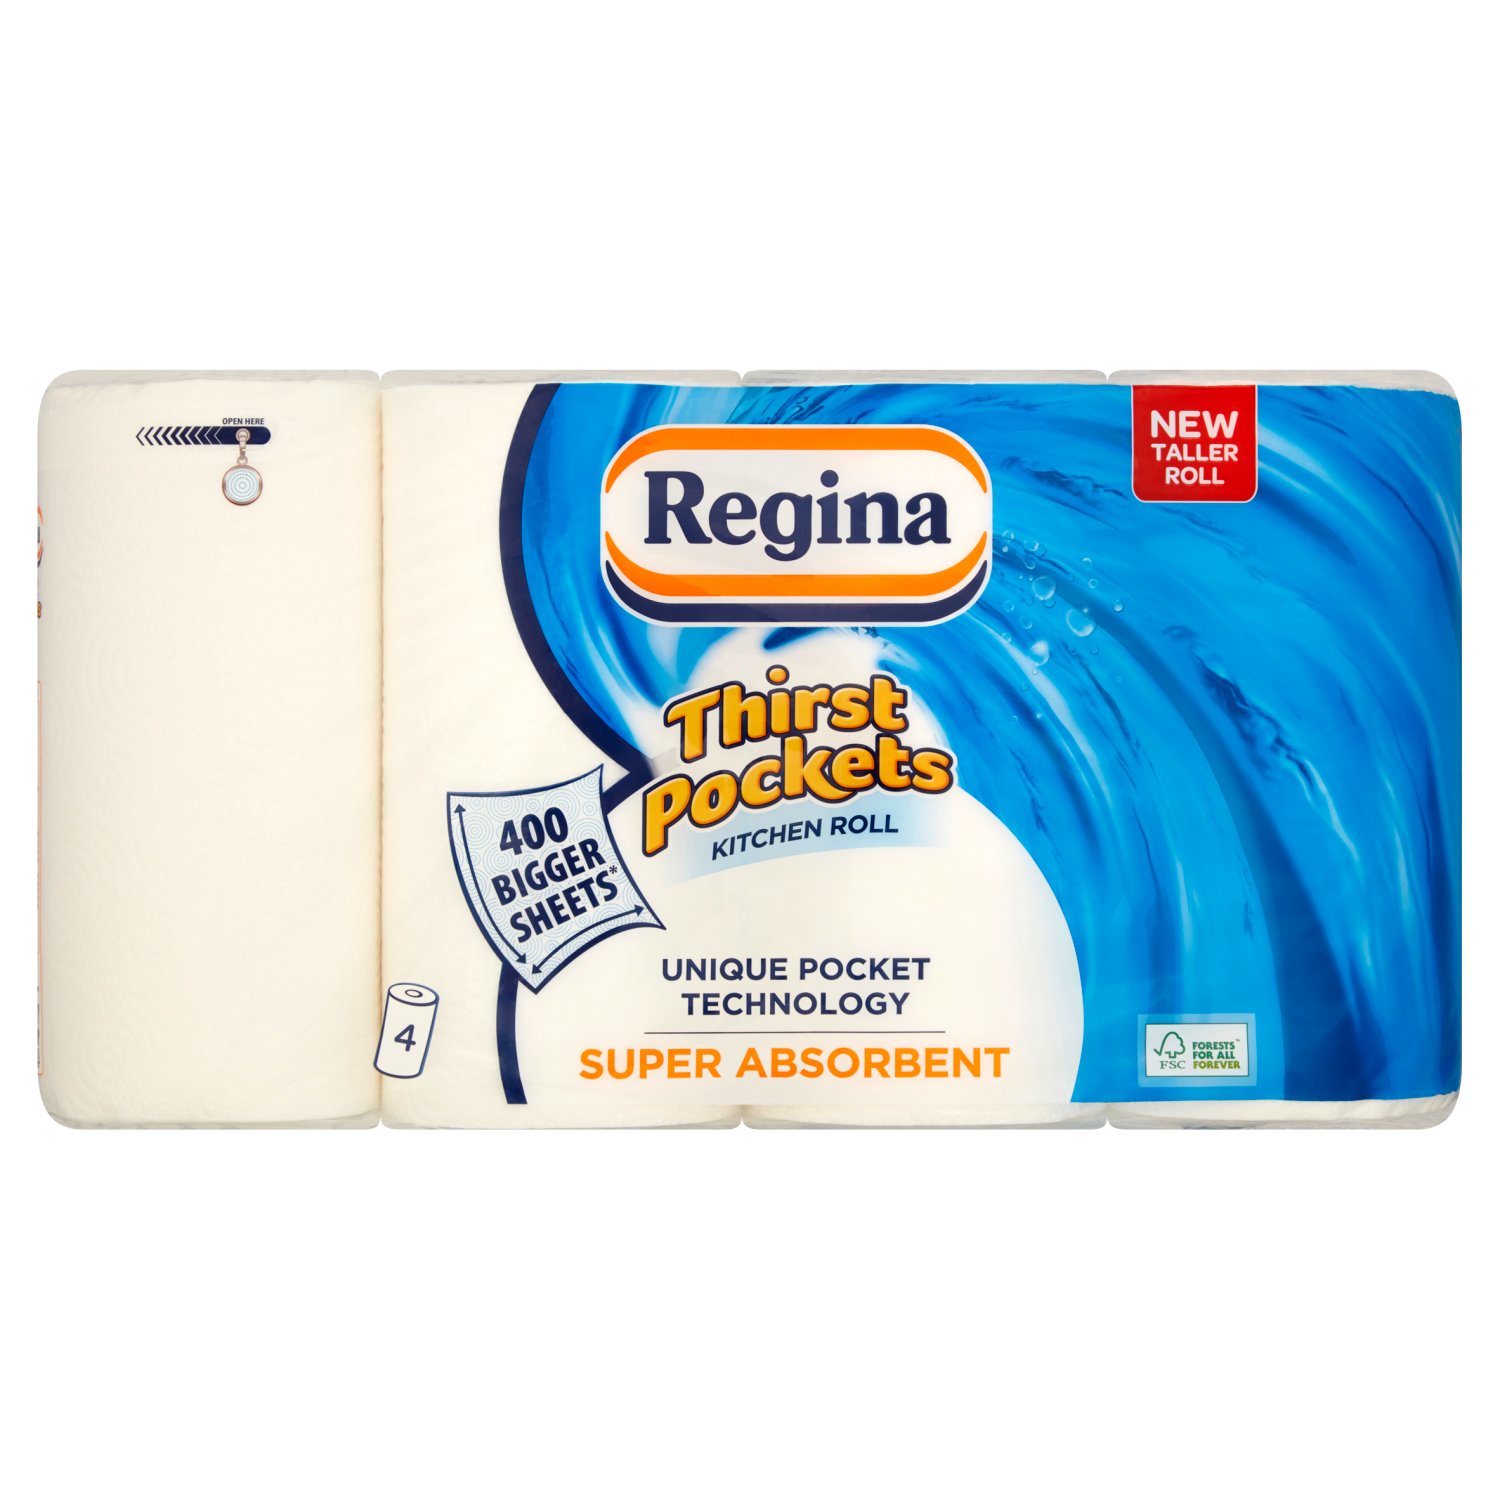 Regina Thirst Pockets Kitchen Towel 4 Roll (4 Roll)